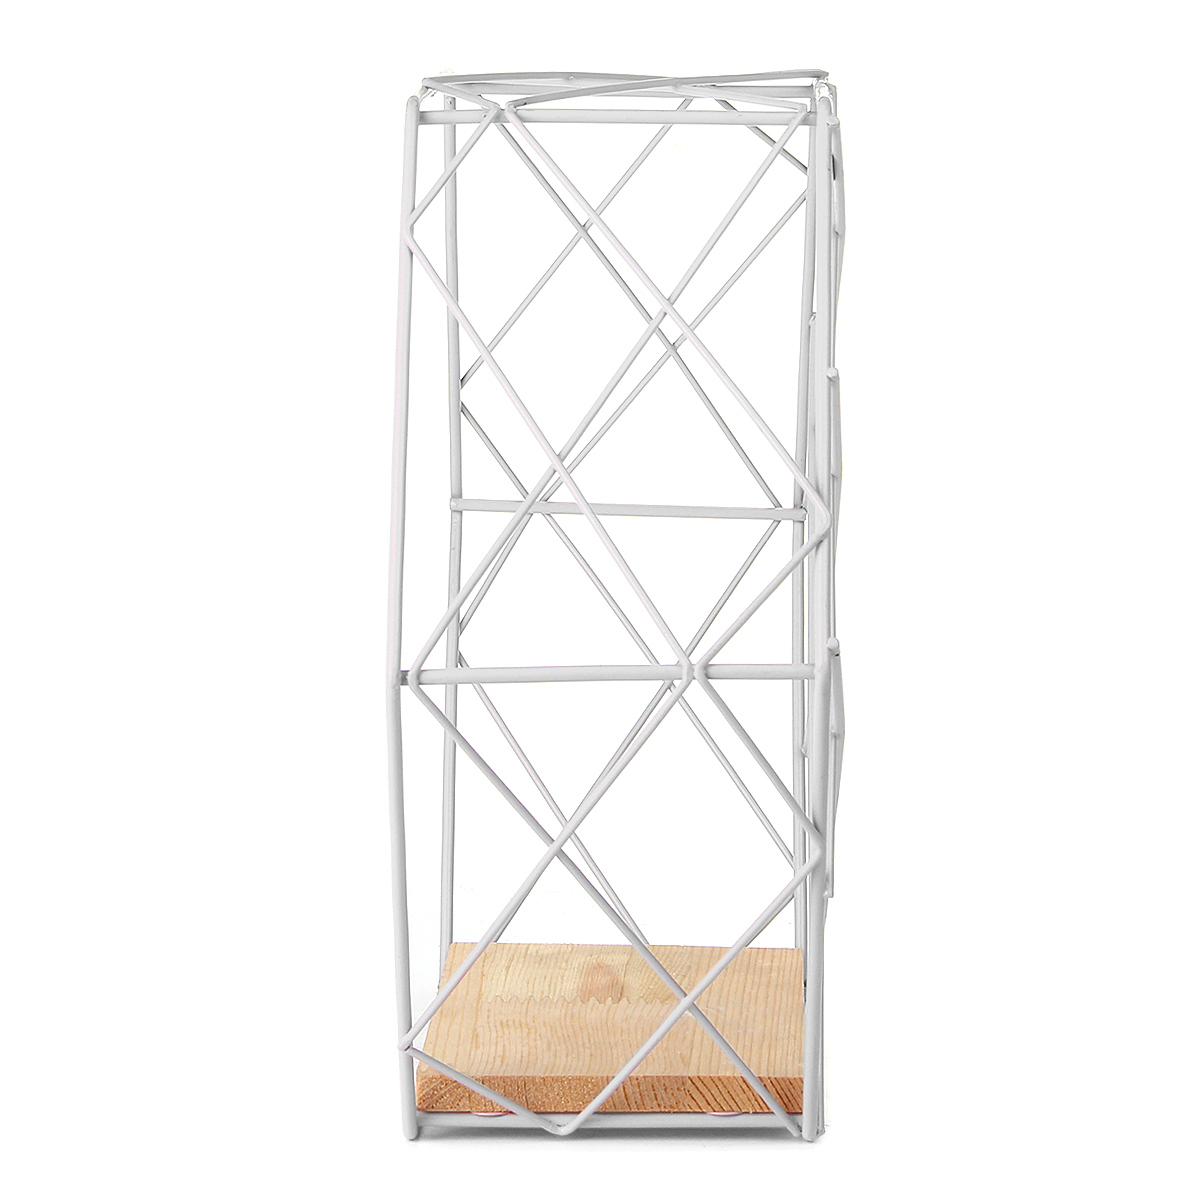 DIY-Wall-mounted-Display-Shelf-Rack-Floating-Storage-Iron-Wood-Organizer-1661425-2